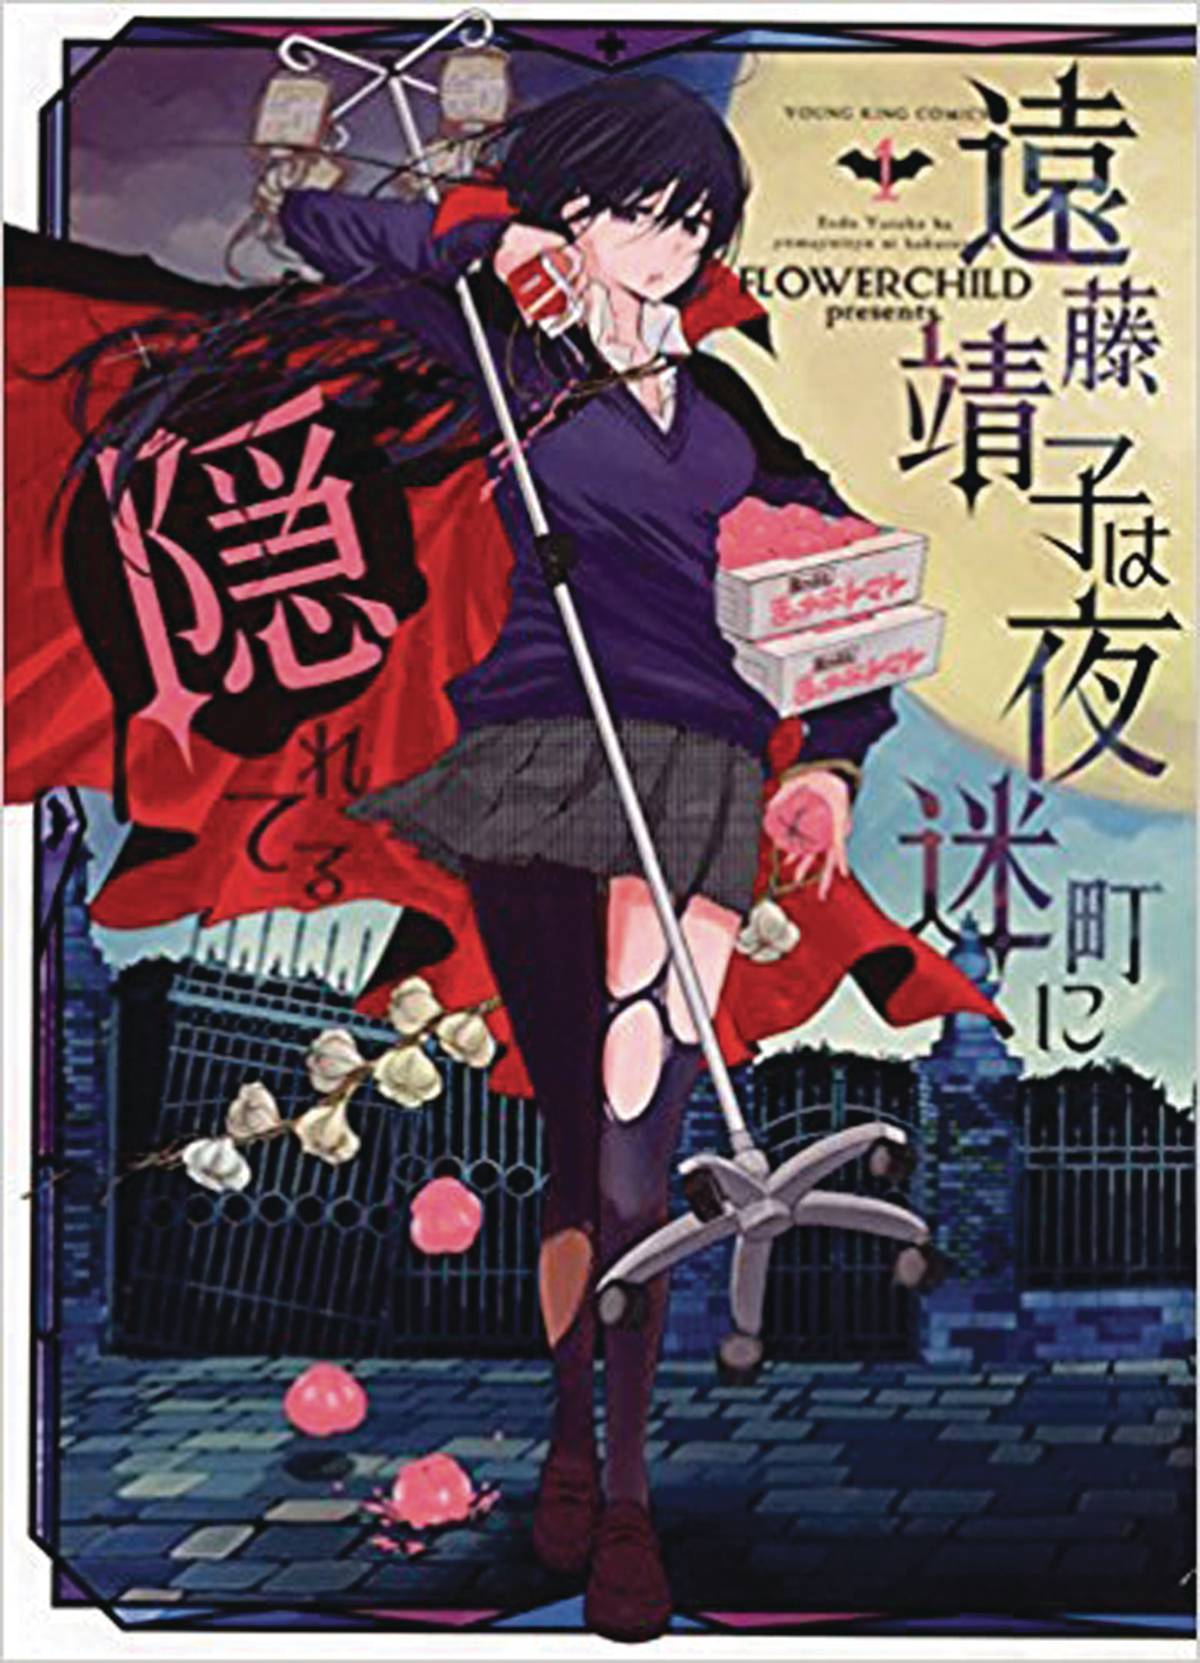 Hungry For You Endo Yasuko Stalks Night Manga Volume 1 (Mature)